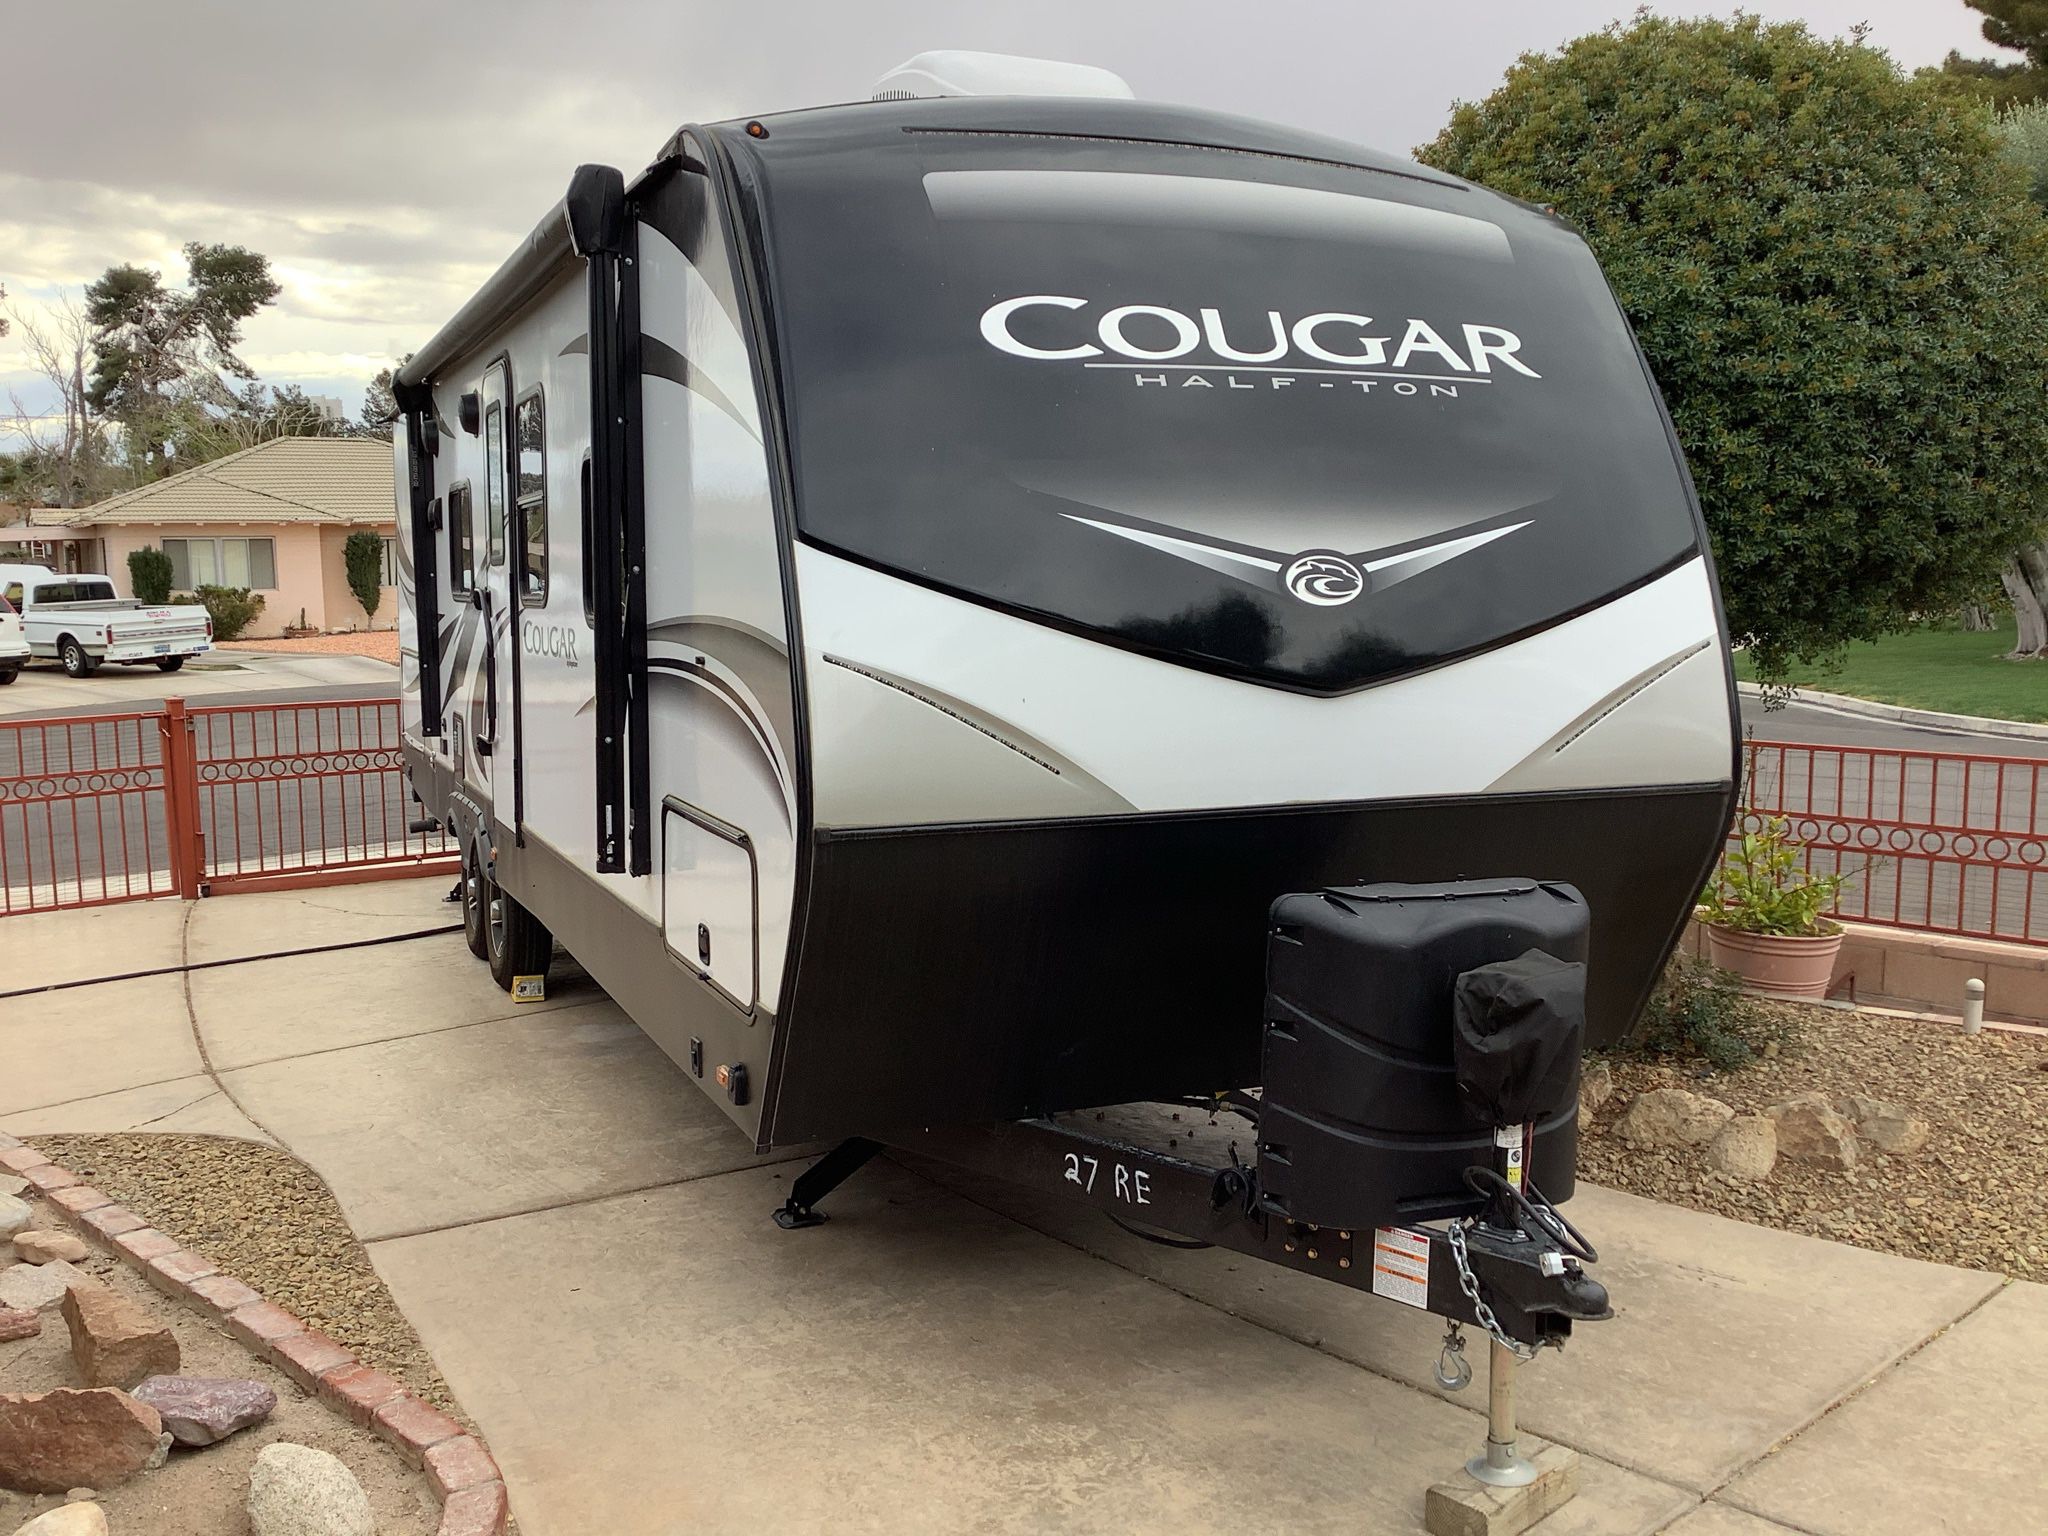 19 foot cougar travel trailer